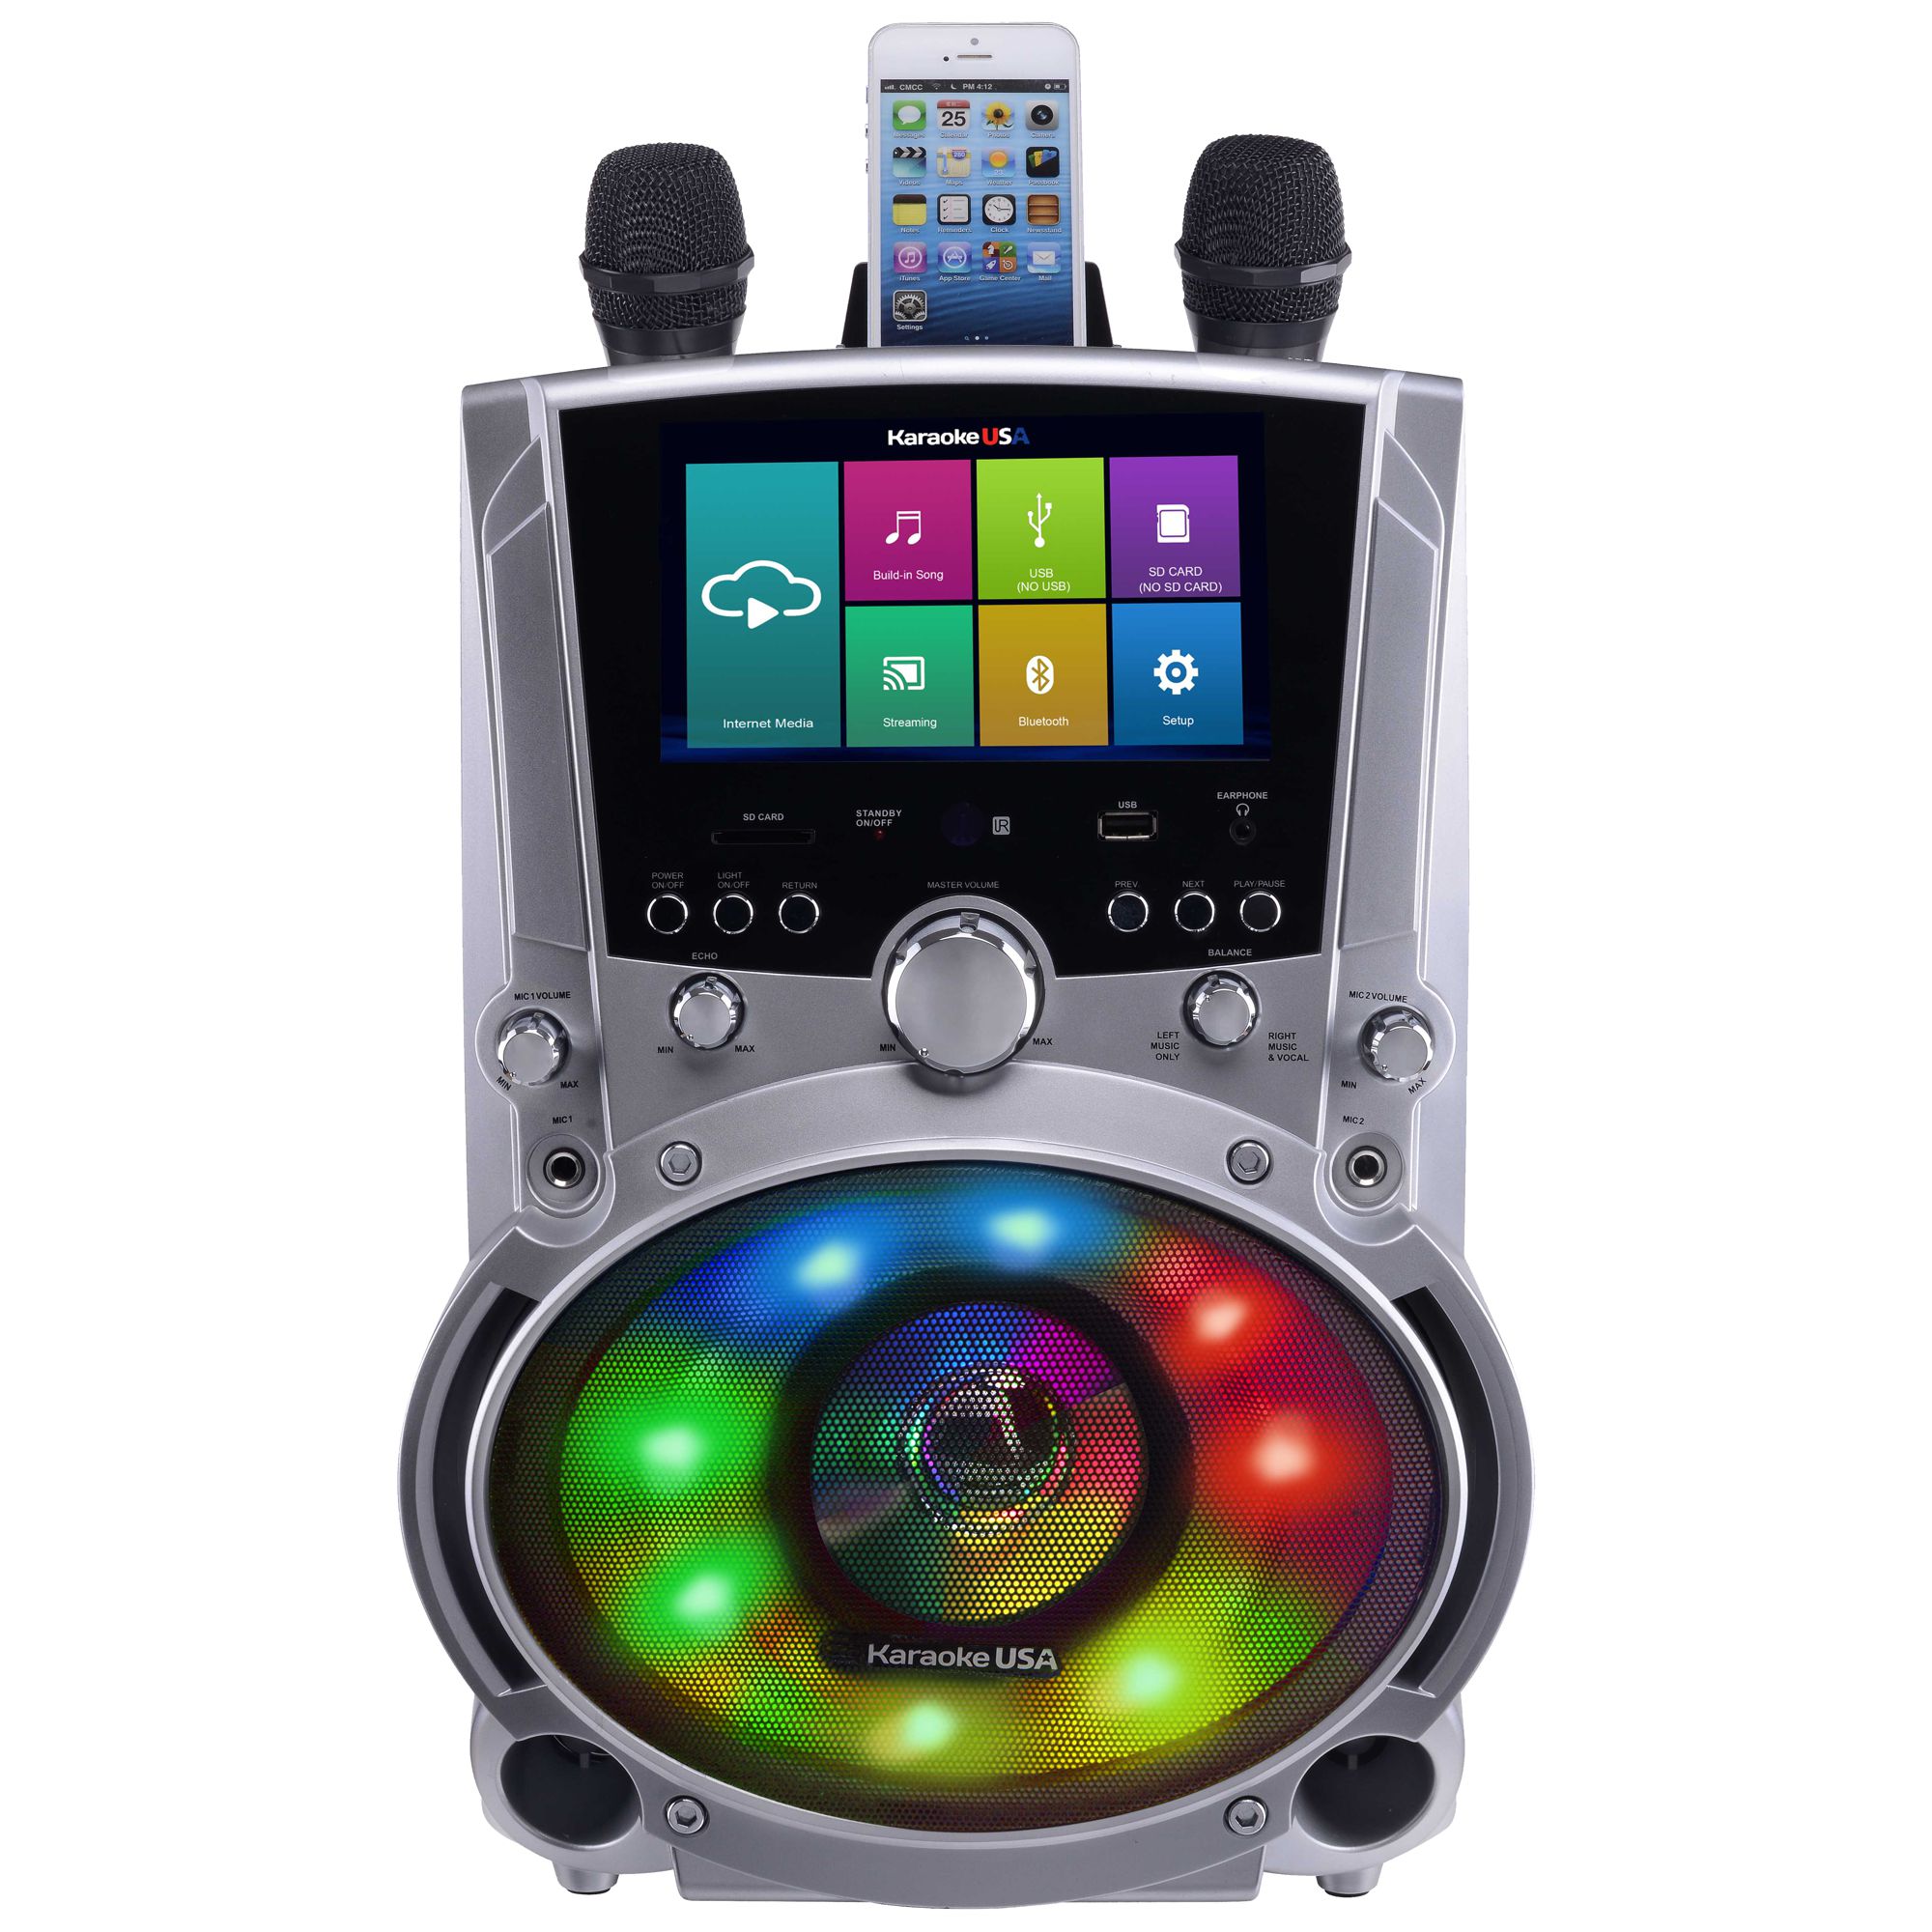 WK760 - All-In-One Wi-Fi Multimedia Karaoke System With 7